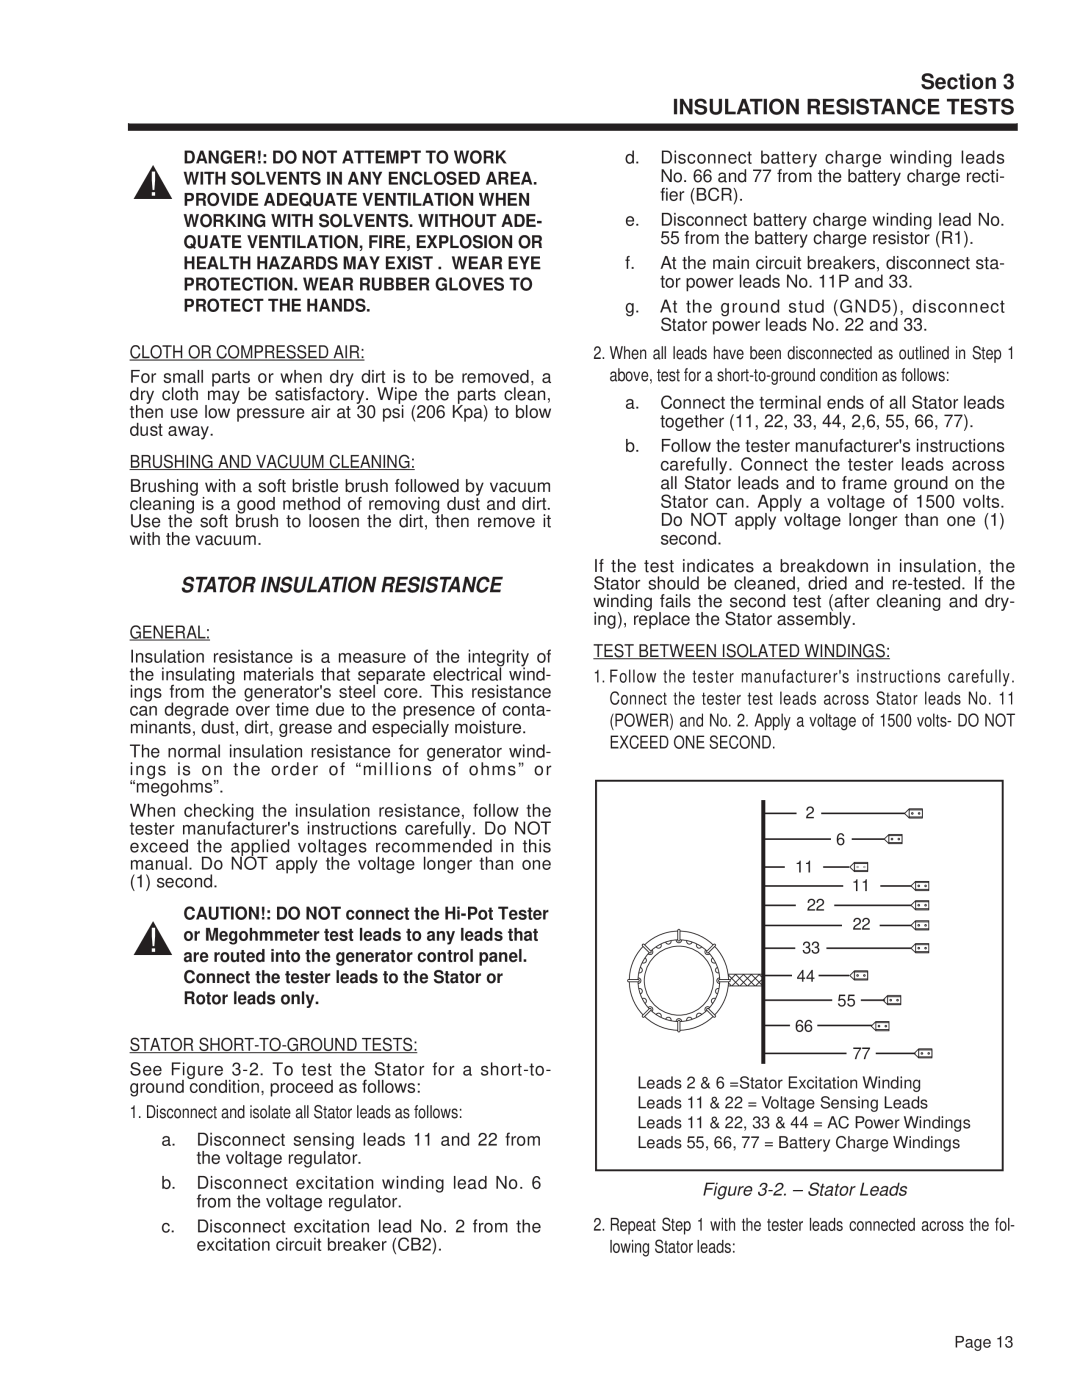 Guardian Technologies 4270 manual Stator Insulation Resistance, 2. - Stator Leads, Section INSULATION RESISTANCE TESTS 